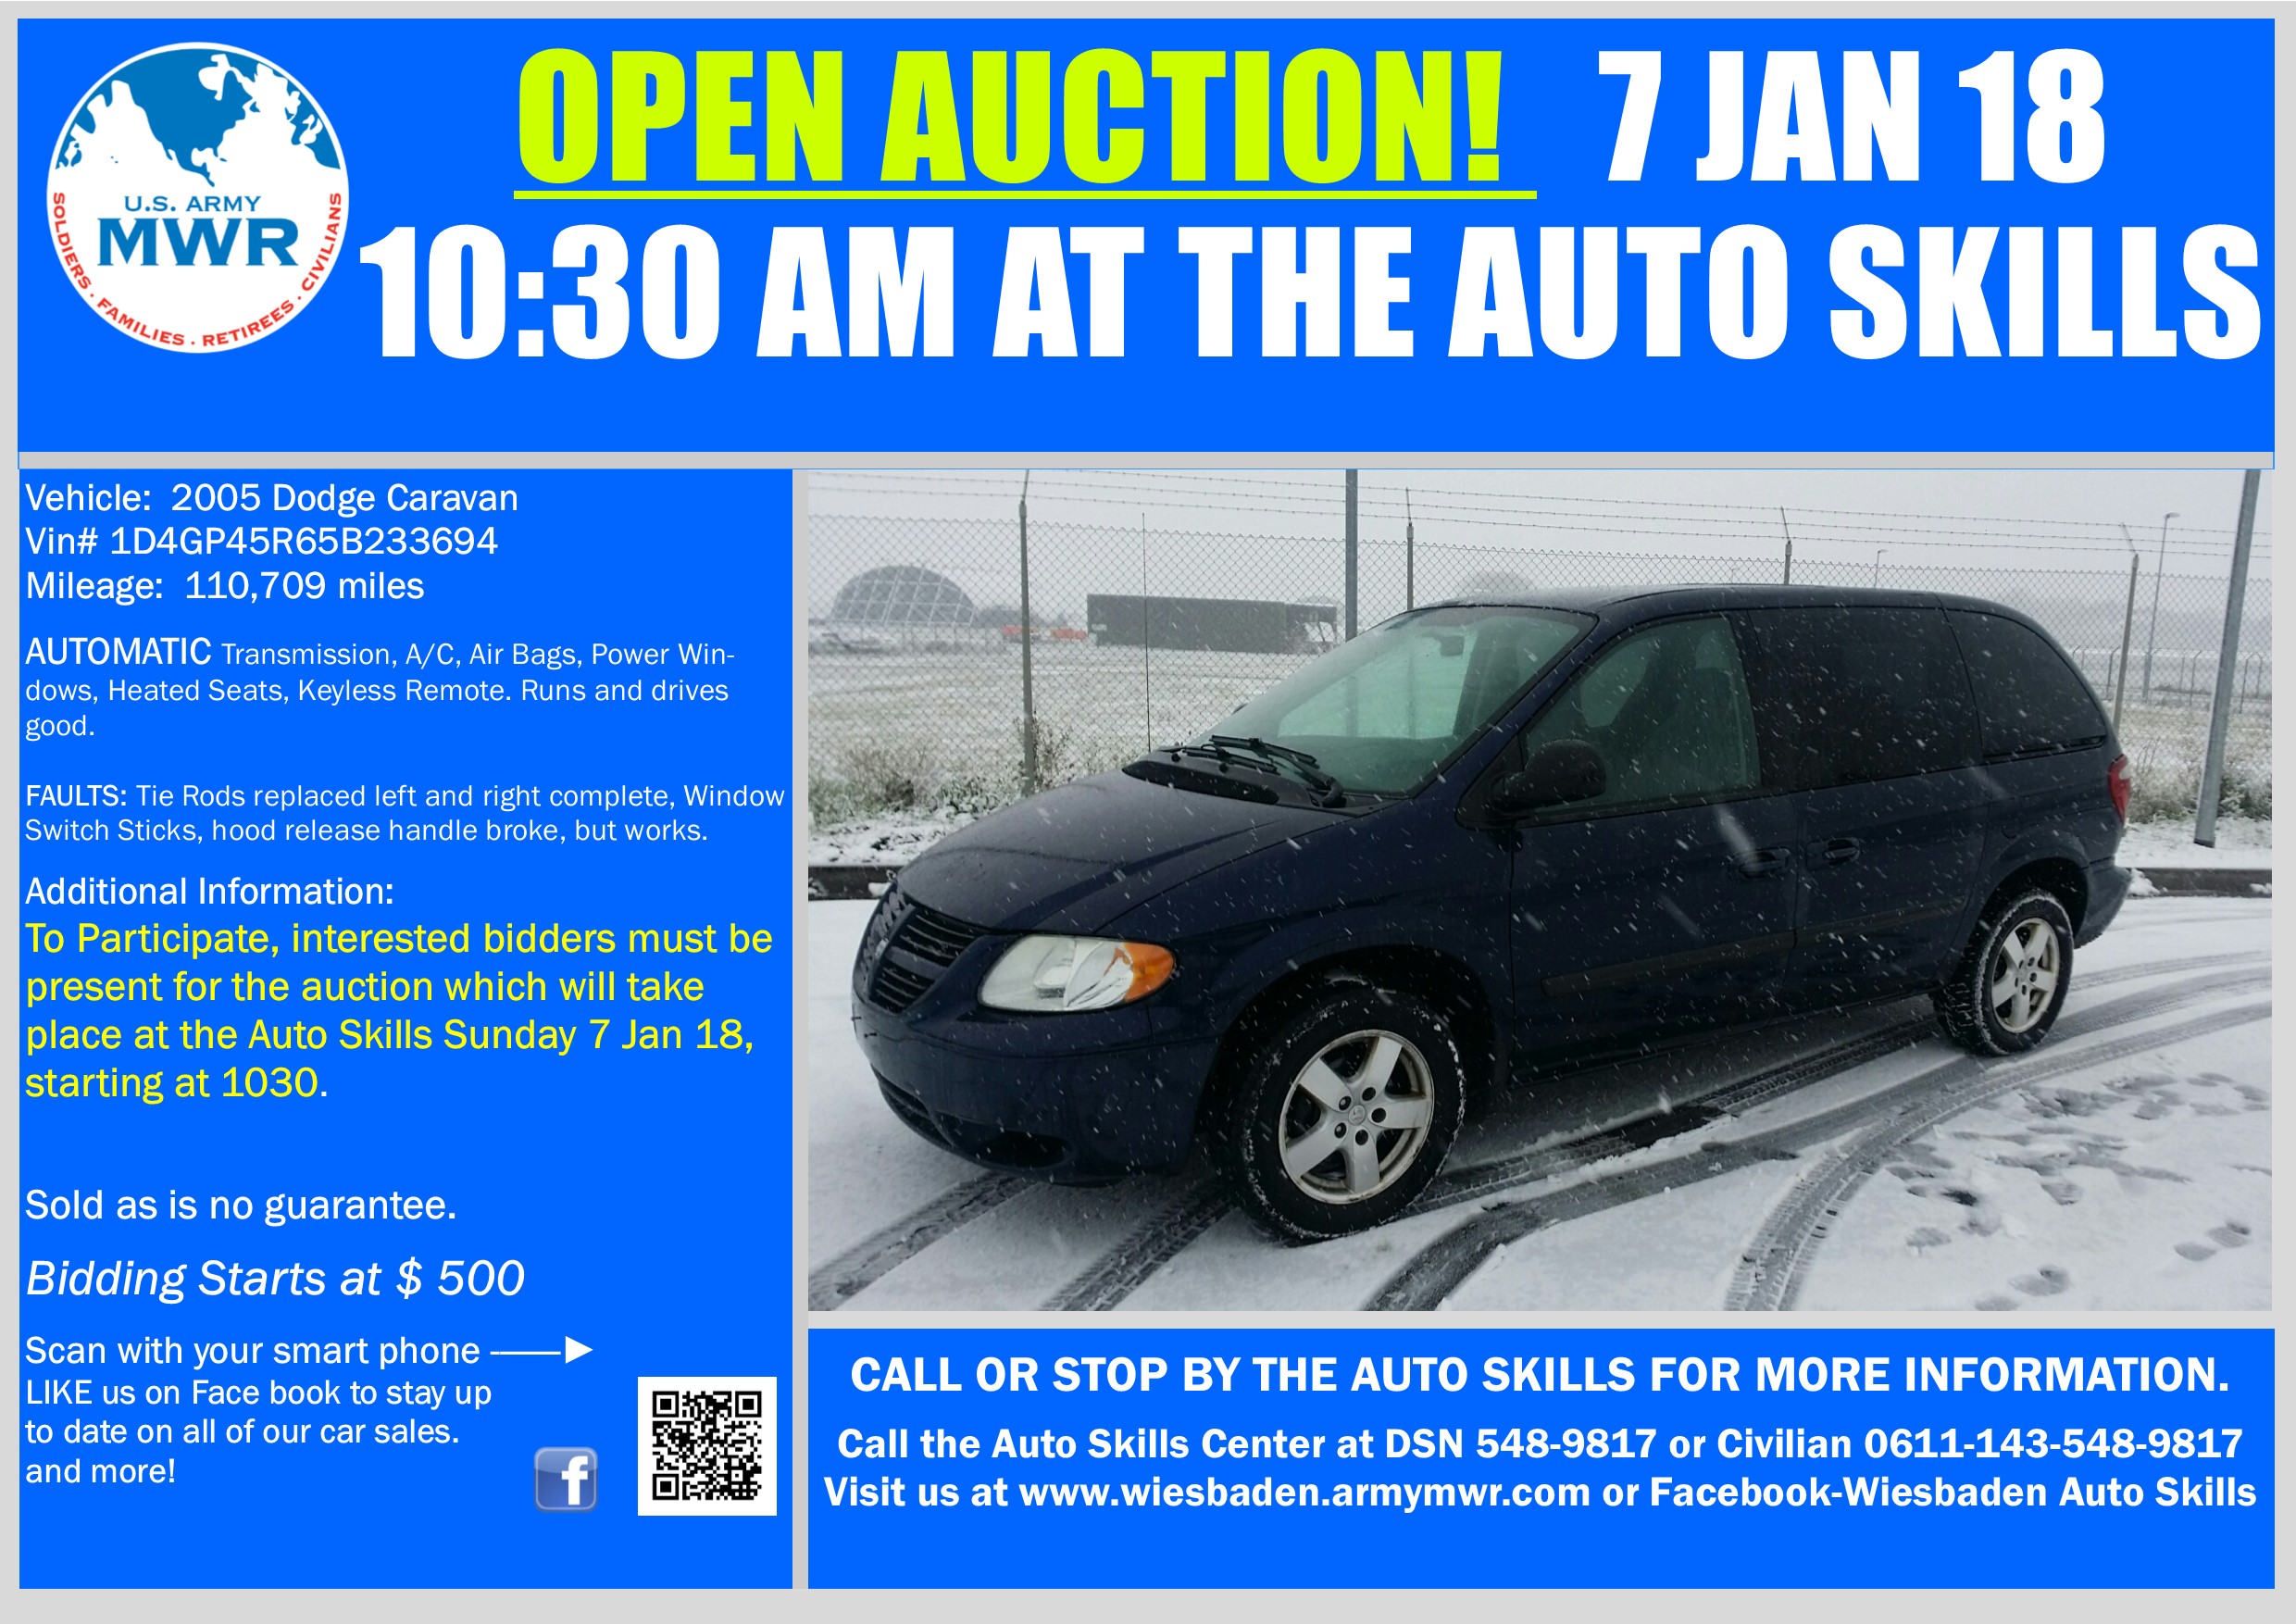 Sale_Dodge Caravan 7 Jan 18 Open Auction.jpg